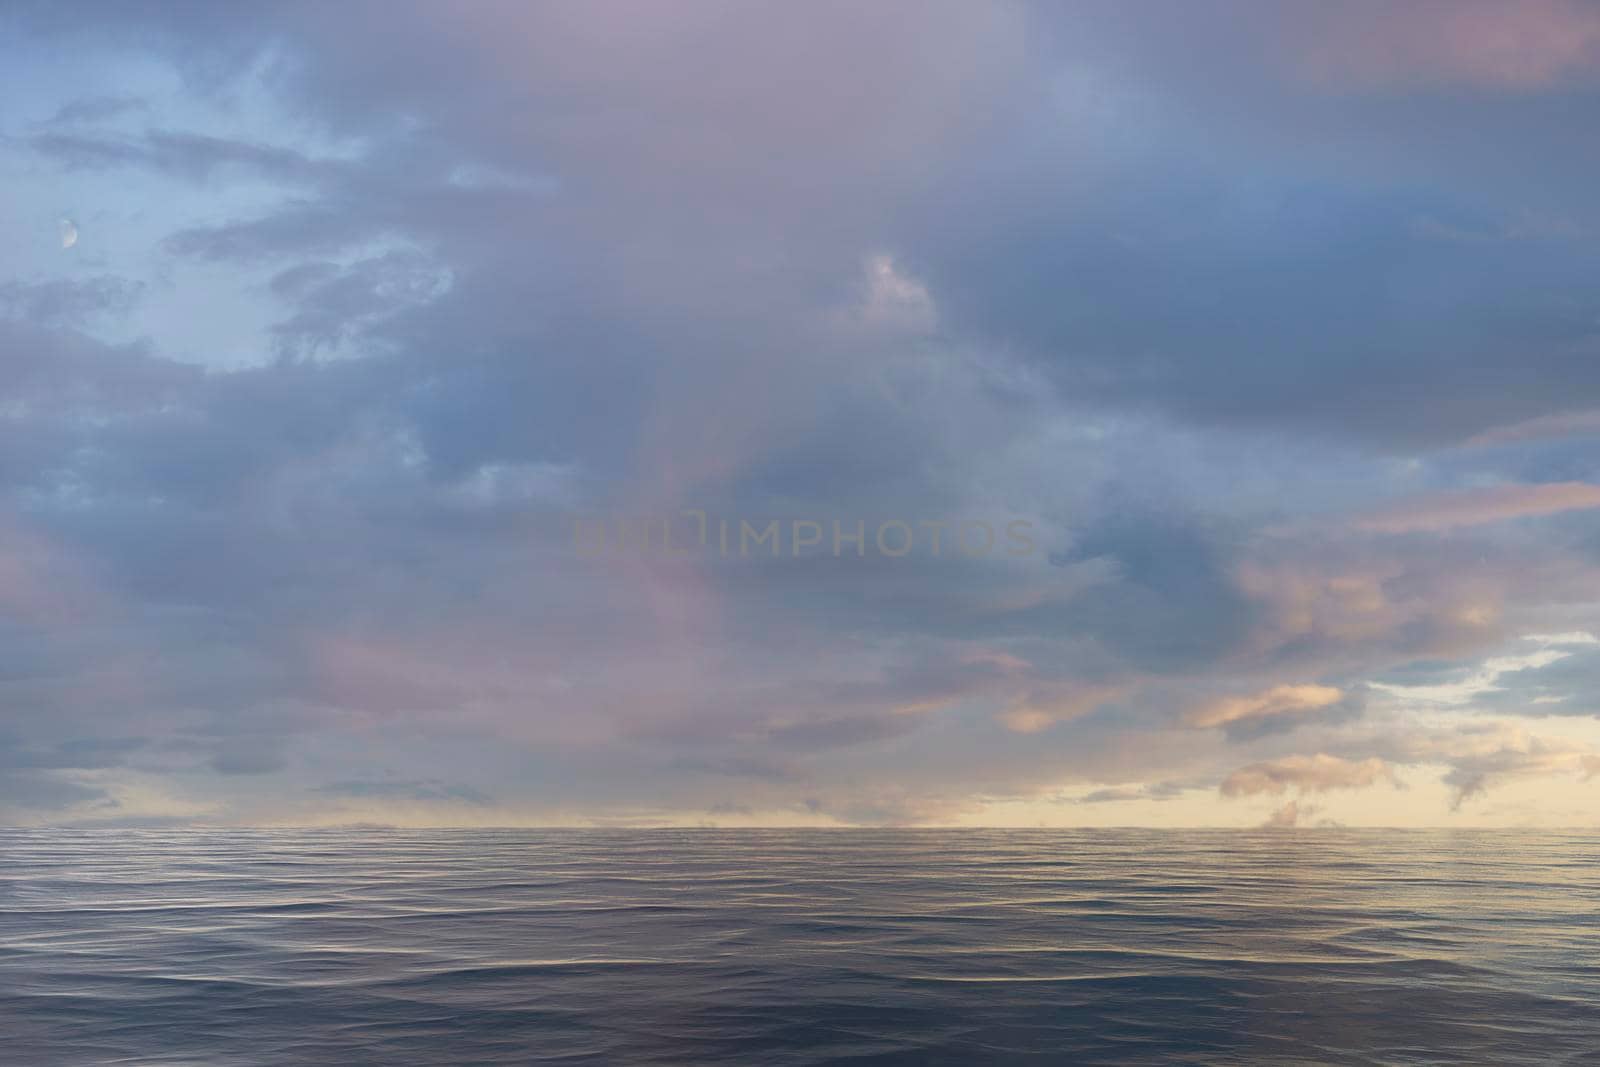 Seascape with evening overcast sky over the sea.